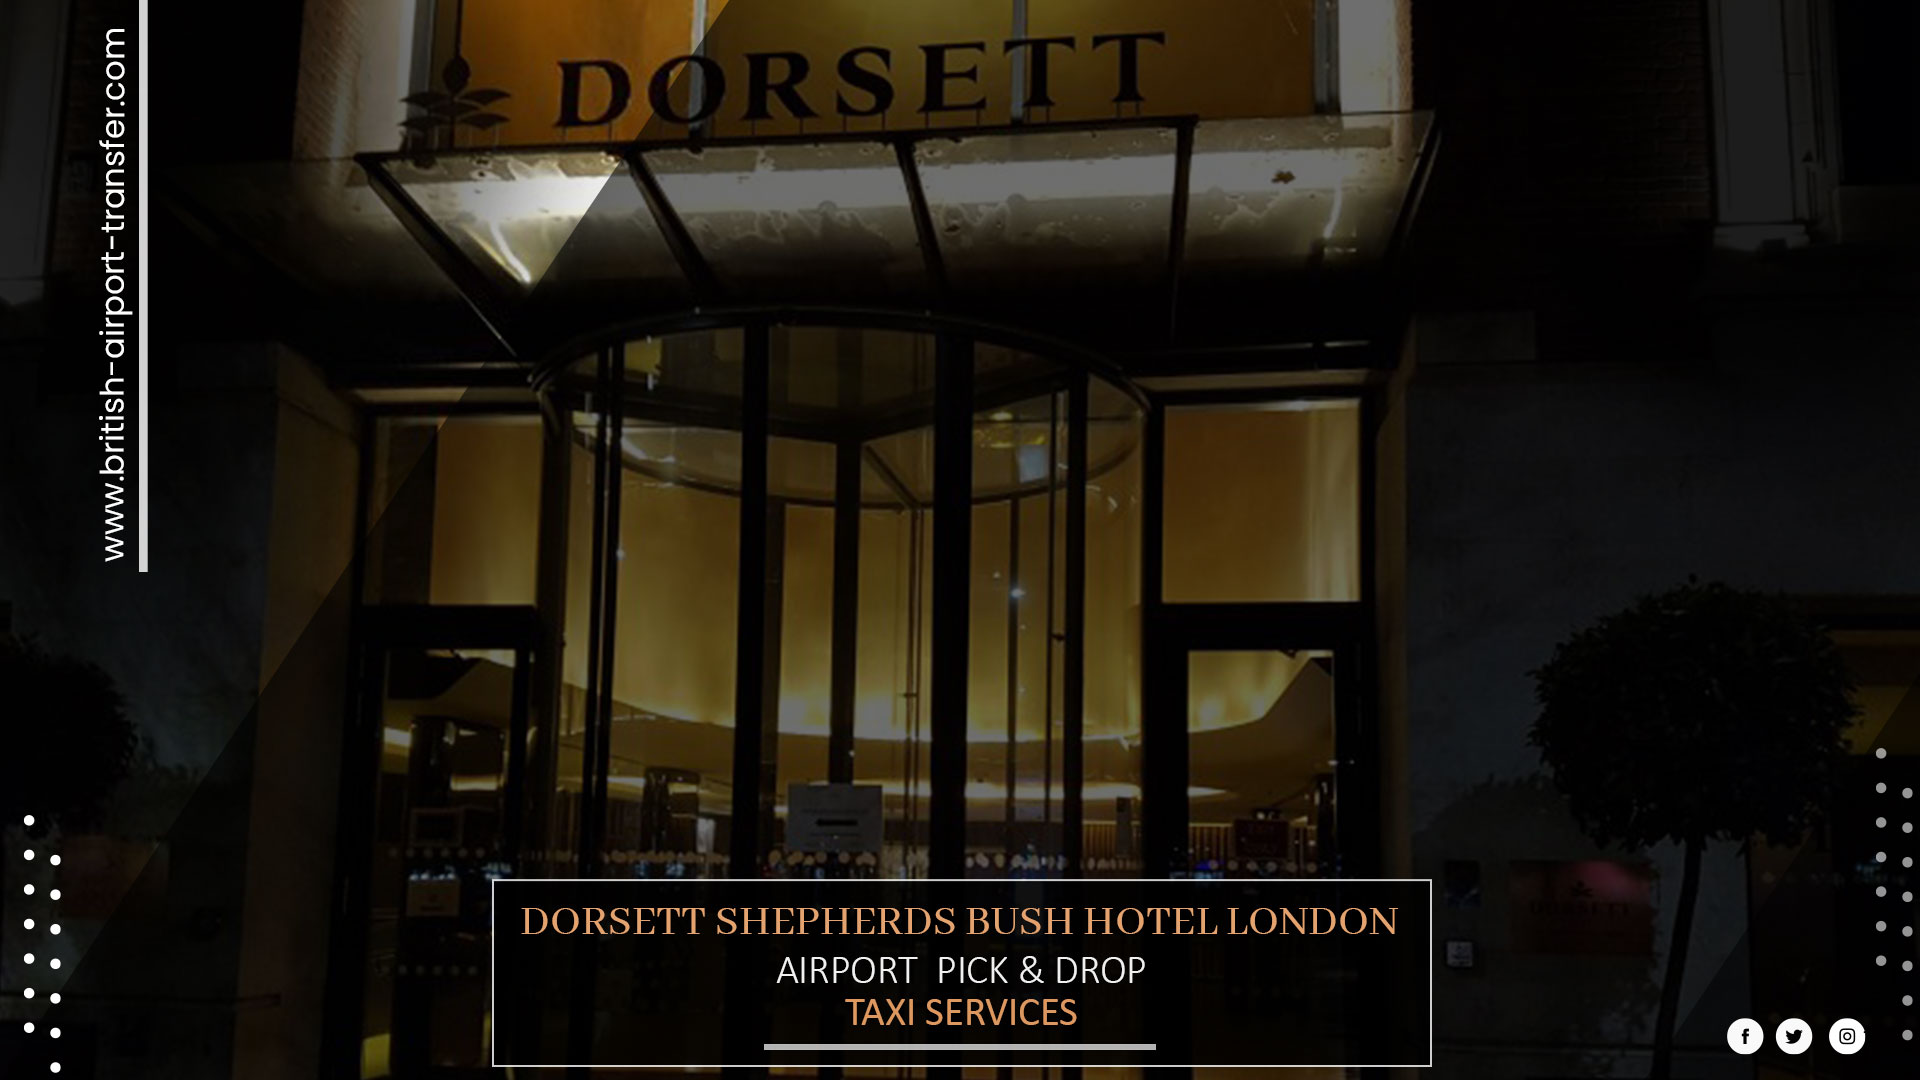 Taxi Cab – Dorsett Shepherds Bush Hotel London / W12 8QE